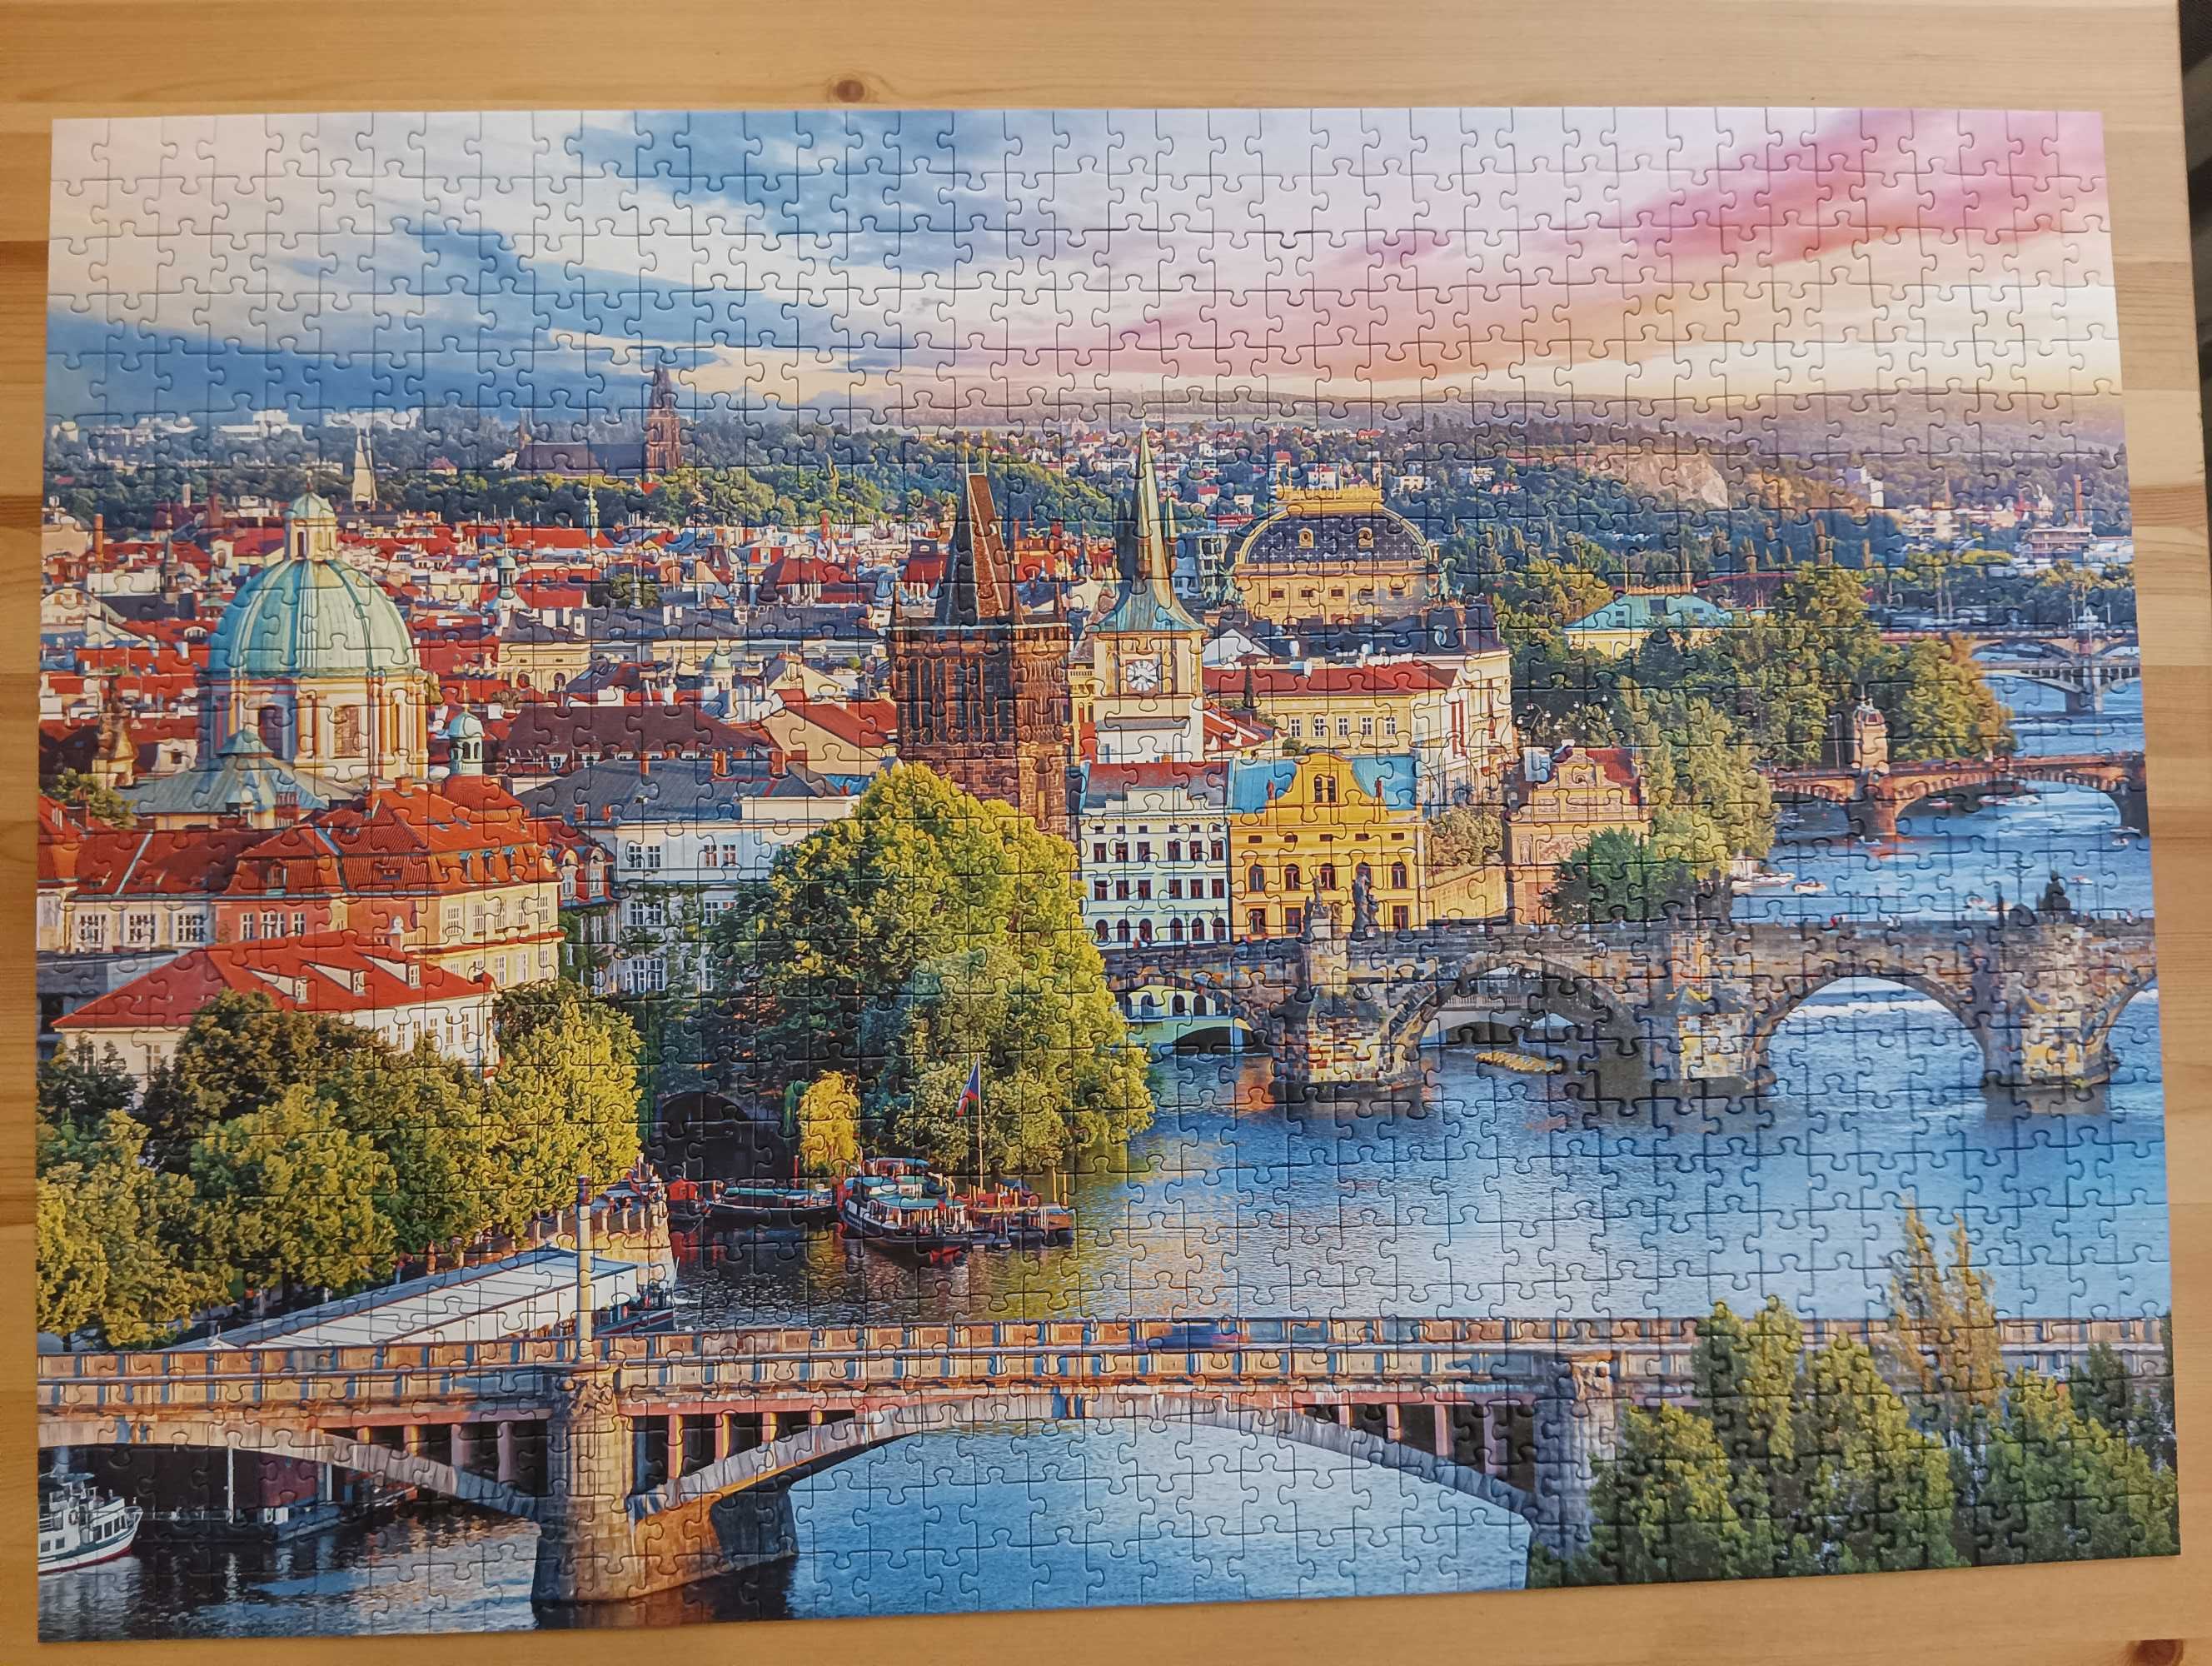 Puzzle Trefl Praga 1000 szt kompletne